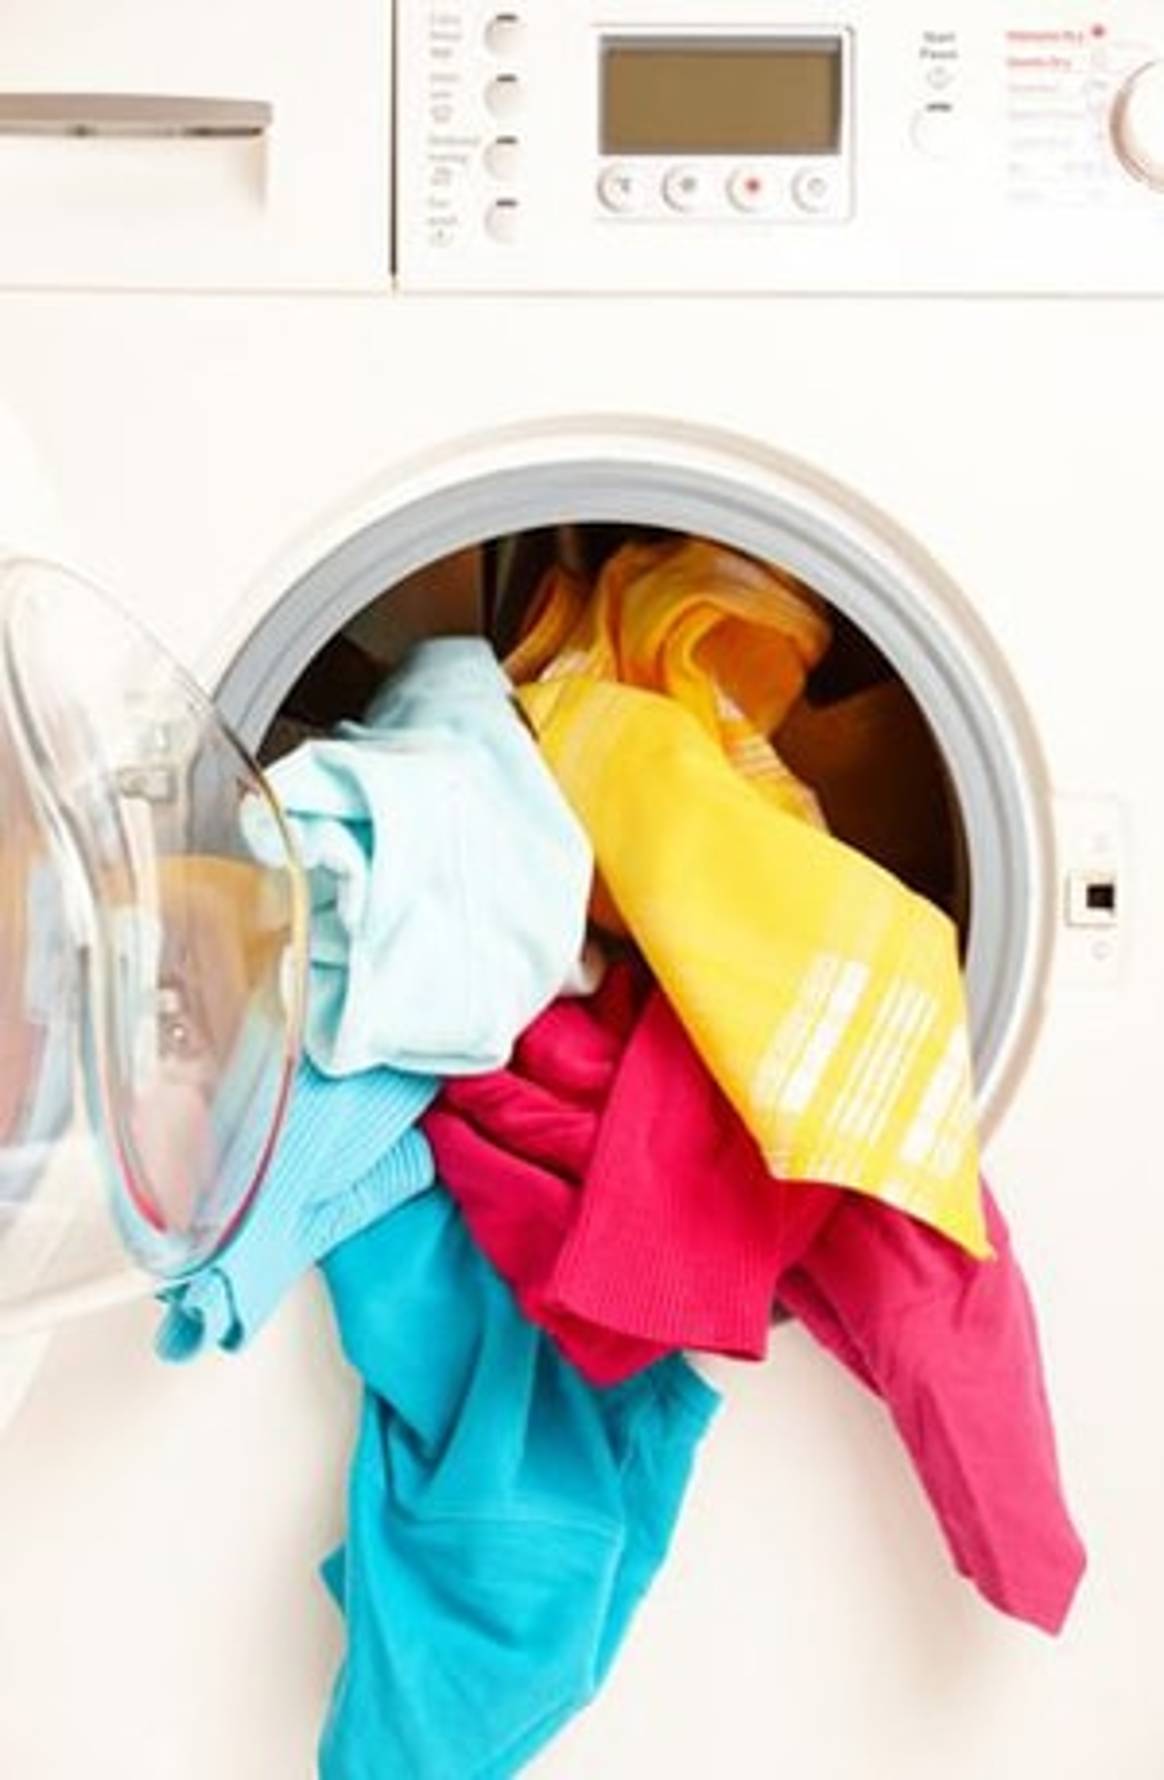 Kust bedreigd door polyester kleding wassen